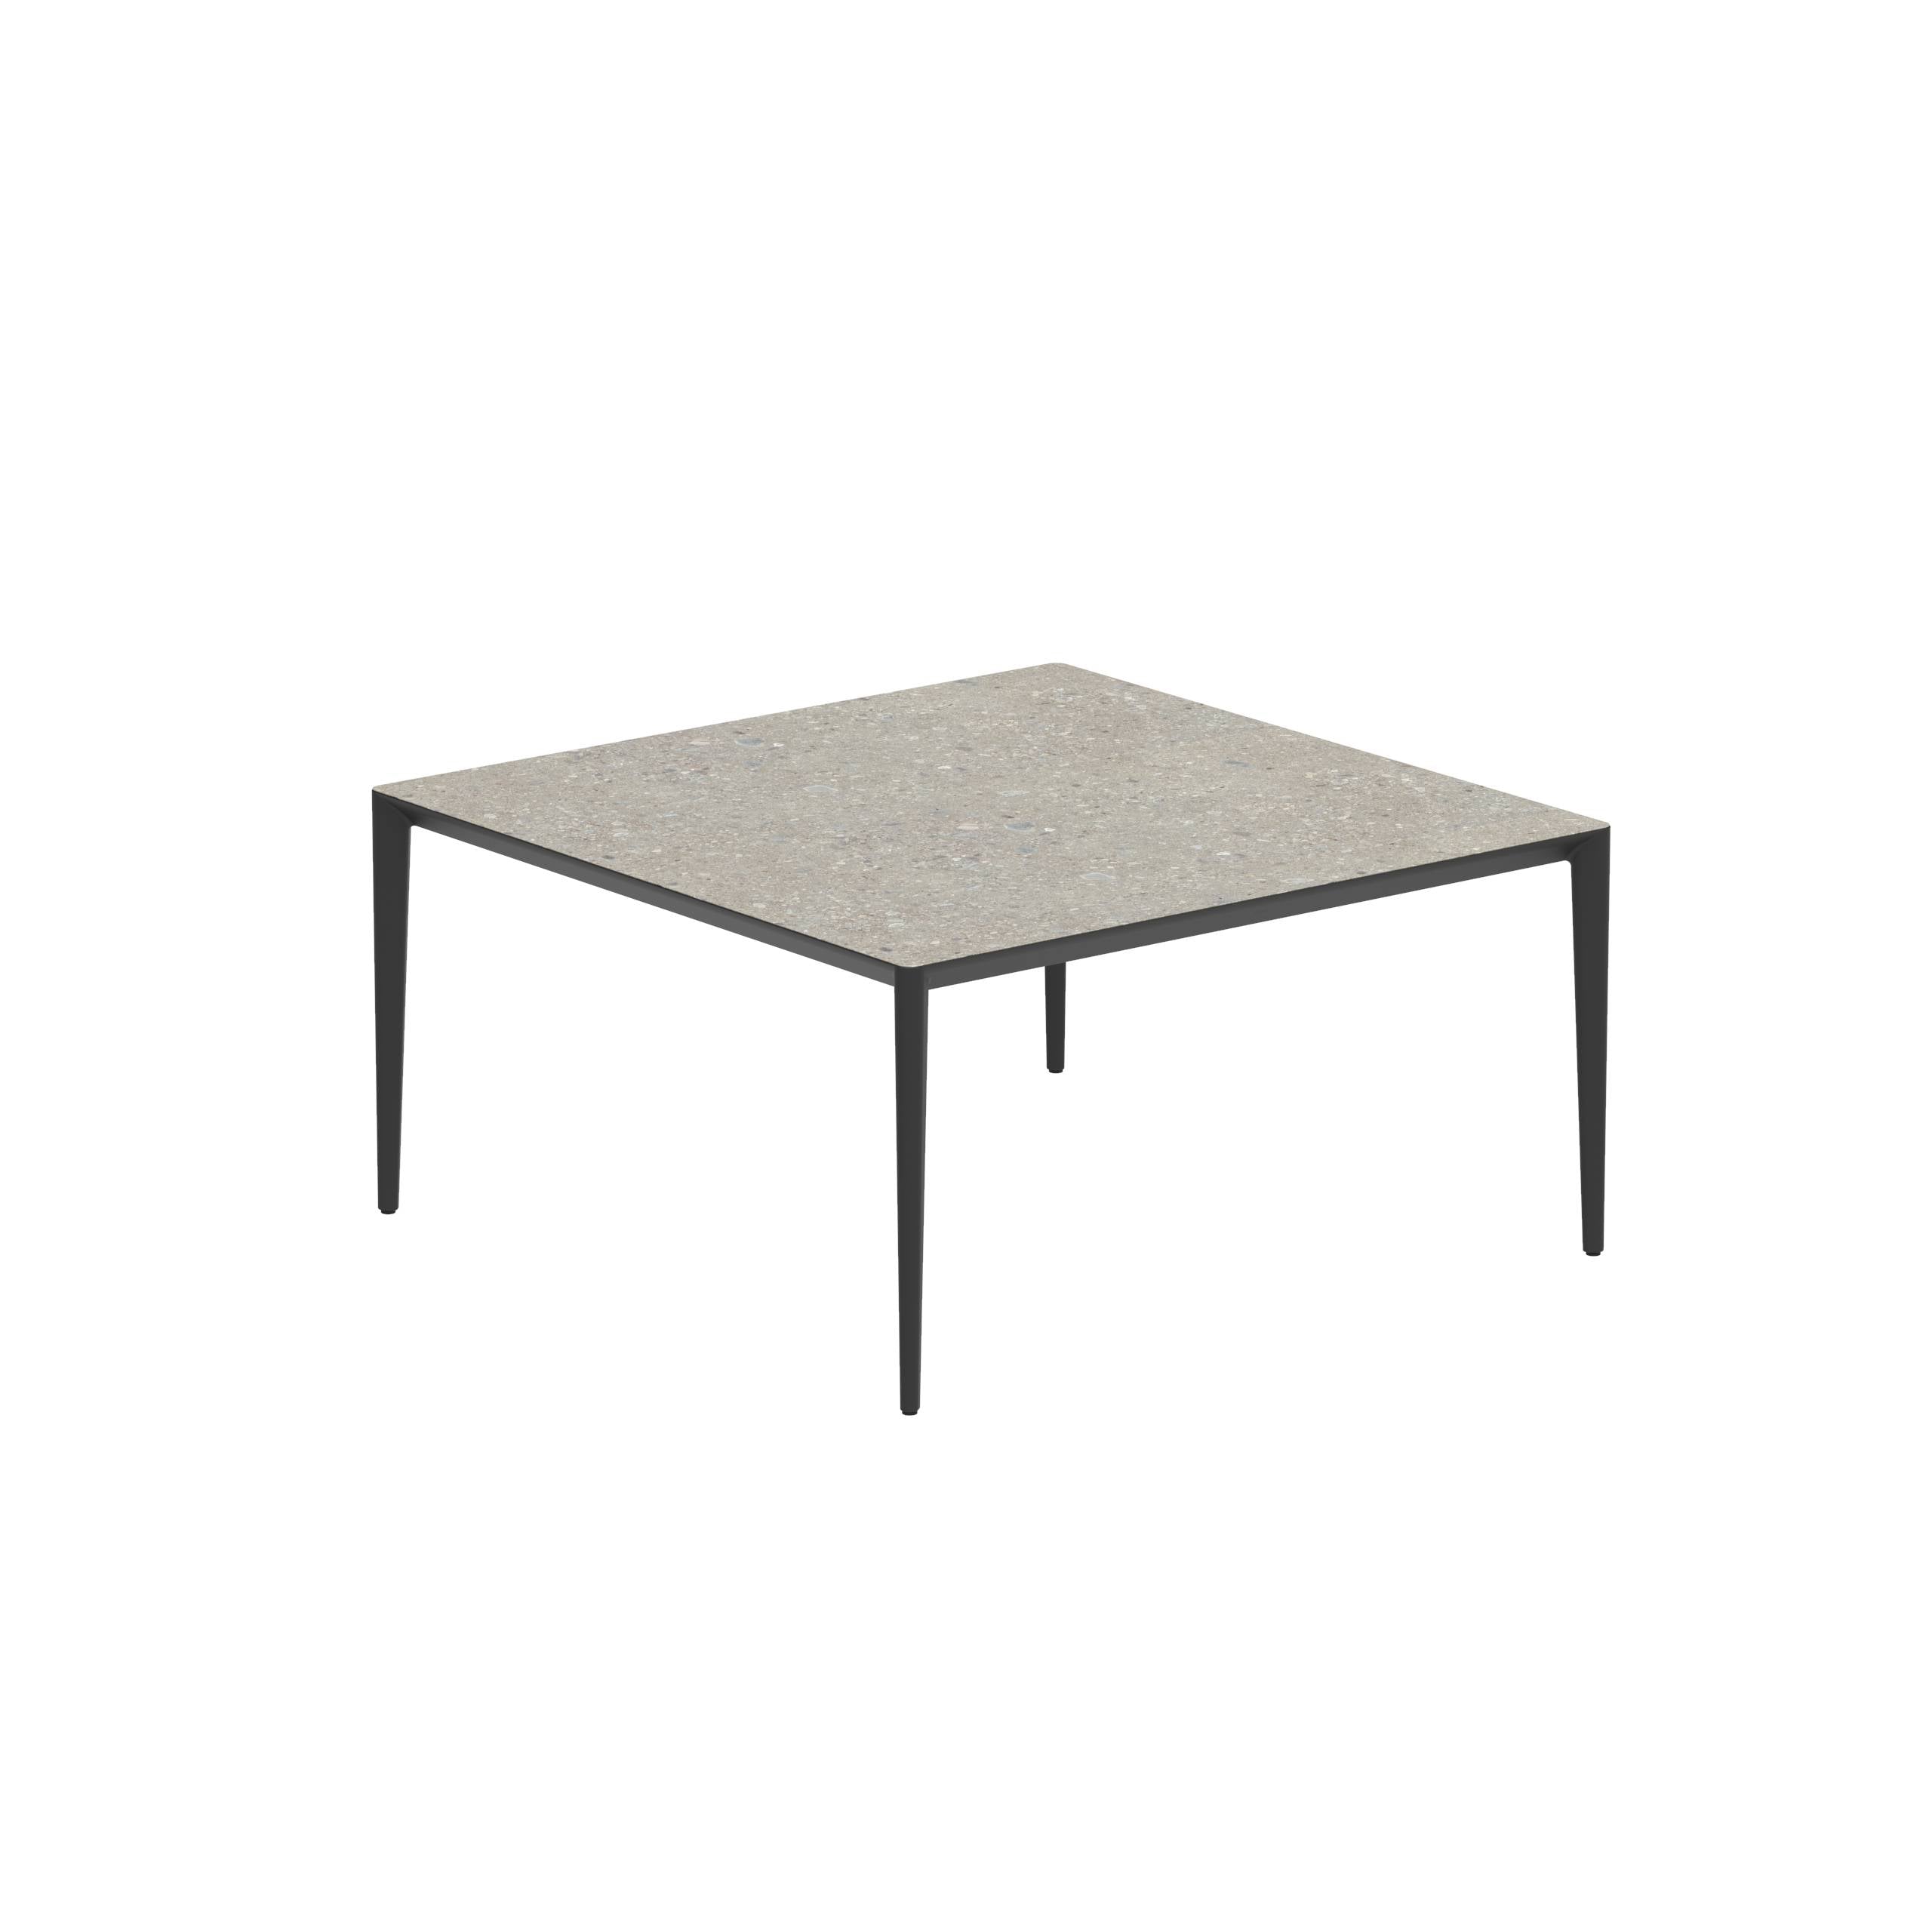 U-Nite Table 150x150cm Anthracite With Ceramic Tabletop In Ceppo Dolomitica